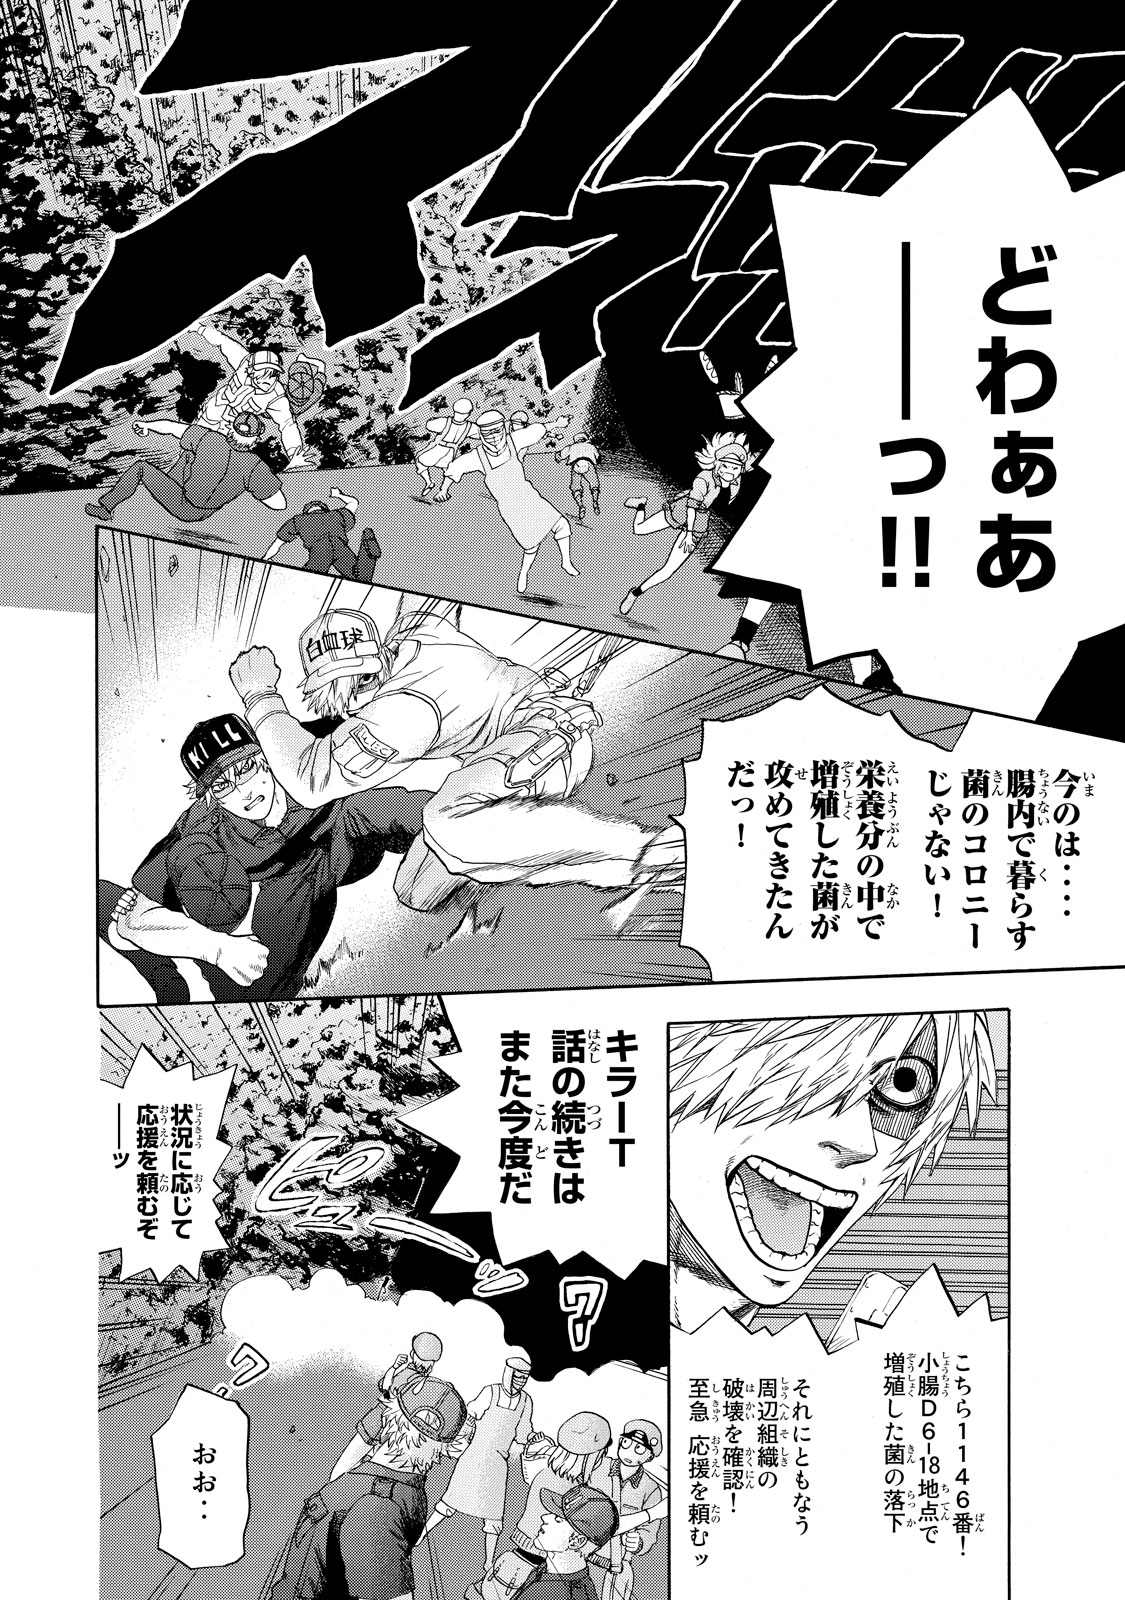 Hataraku Saibou - Chapter 19 - Page 6